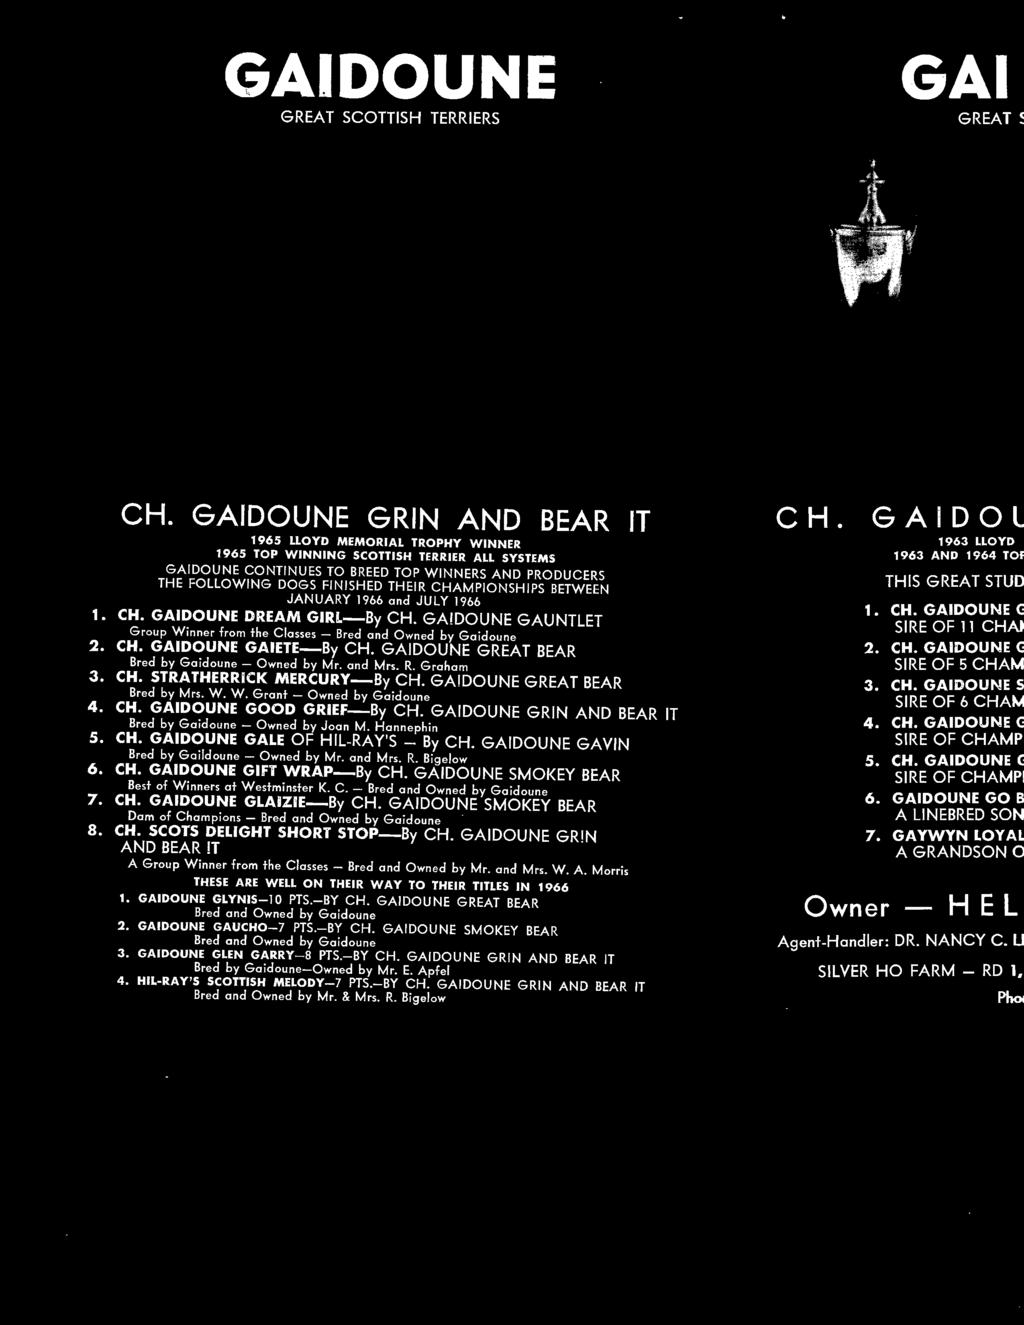 GAIDOUNE GRIN AND BEAR IT Bred by Gaidoune - Owned by Joan M. Hannephin 5. CH. GAIDOUNE GALE OF HIL-RAY'S - By CH. GAIDOUNE GAVIN Bred by Gaildoune - Owned by Mr. and Mrs. R. Big elow 6. CH. GAIDOUNE GIFT WRAP-By CH.